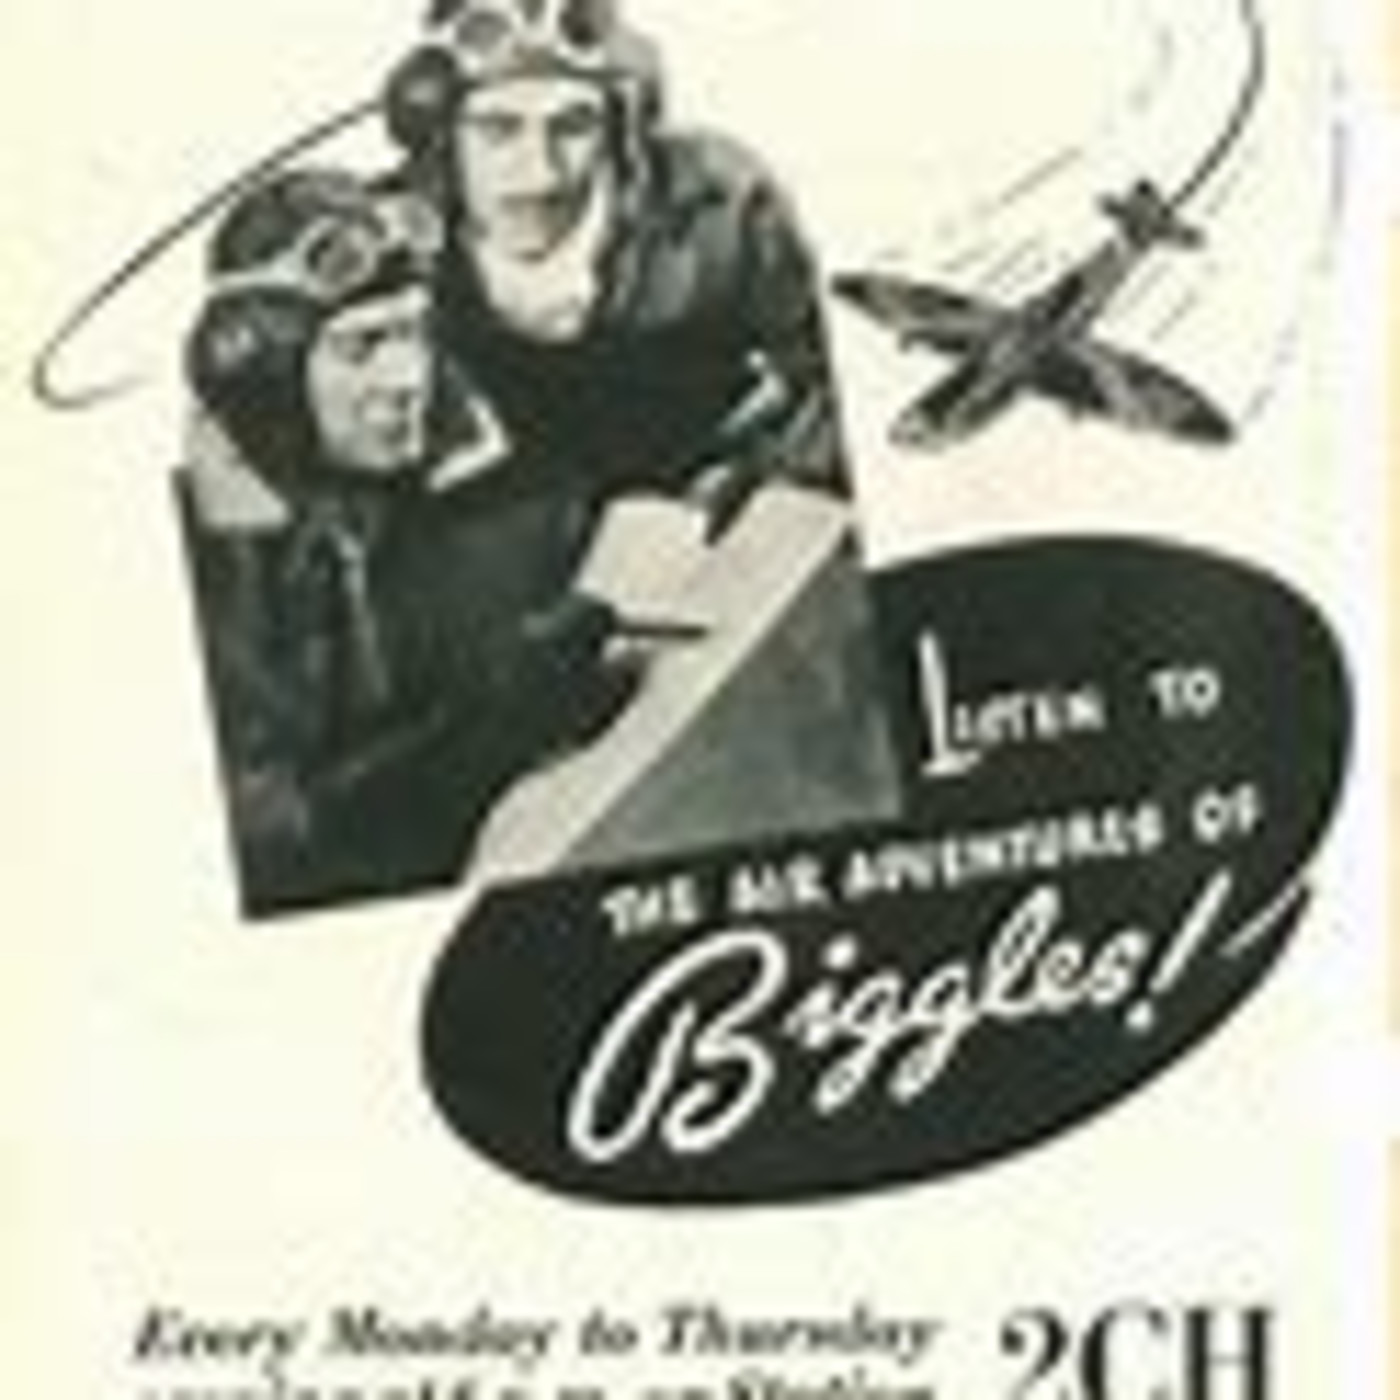 Air Adventures of Biggles xx-xx-xx International Brigade (19)